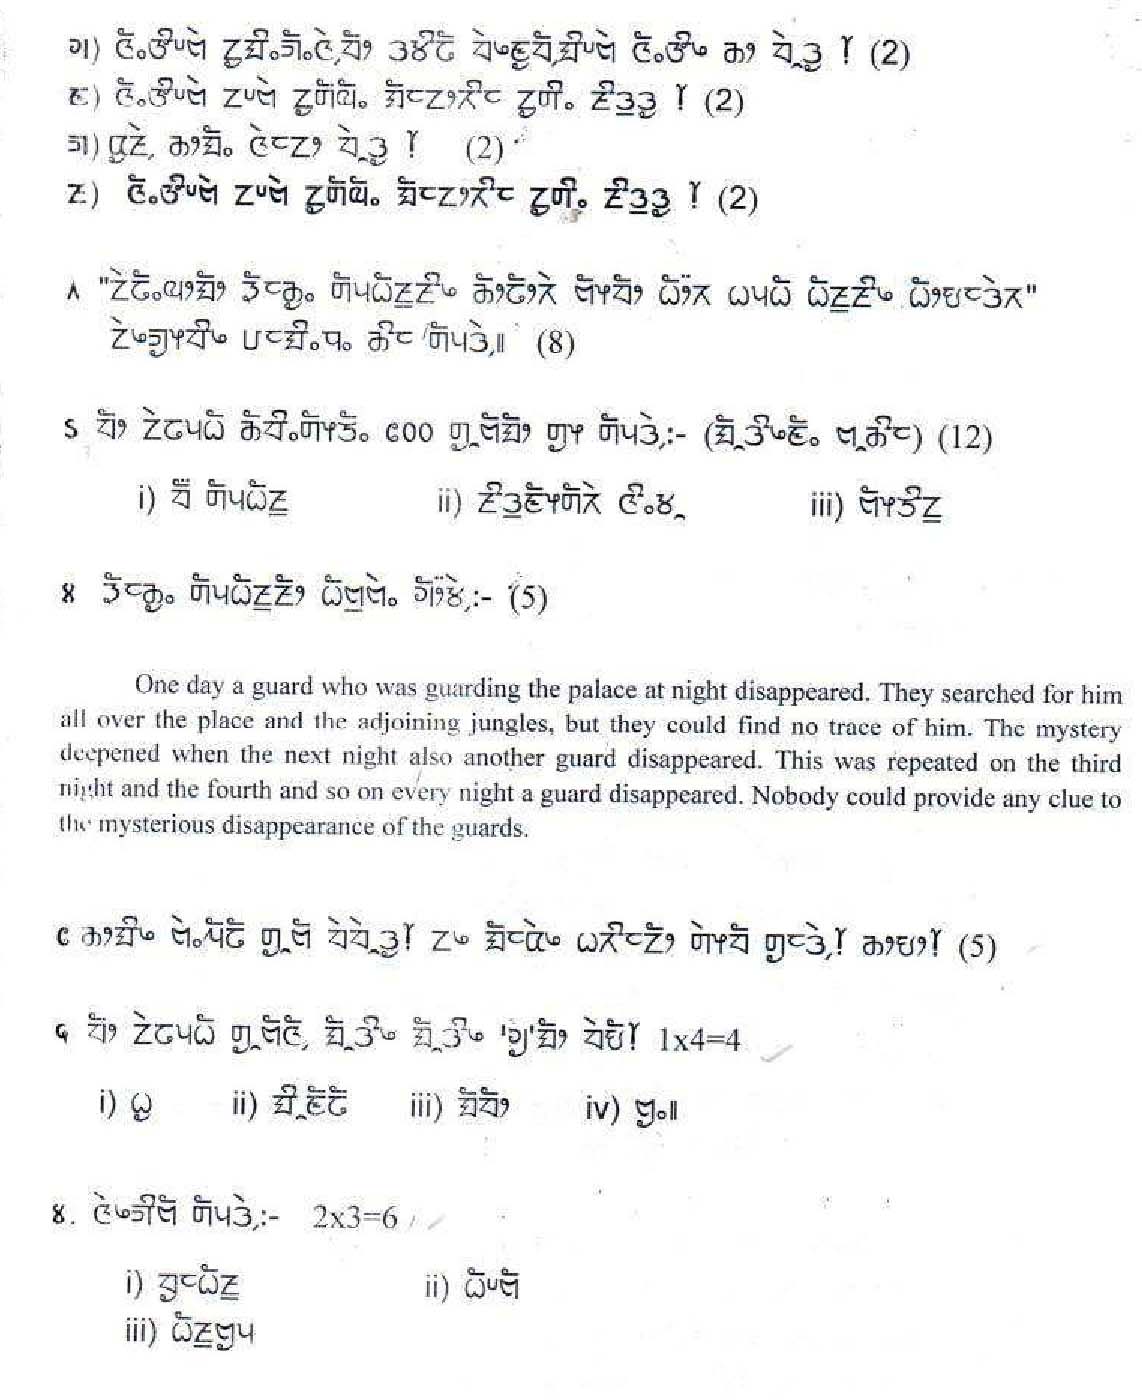 Limboo CBSE Class X Sample Question Paper 2018-19 - Image 2